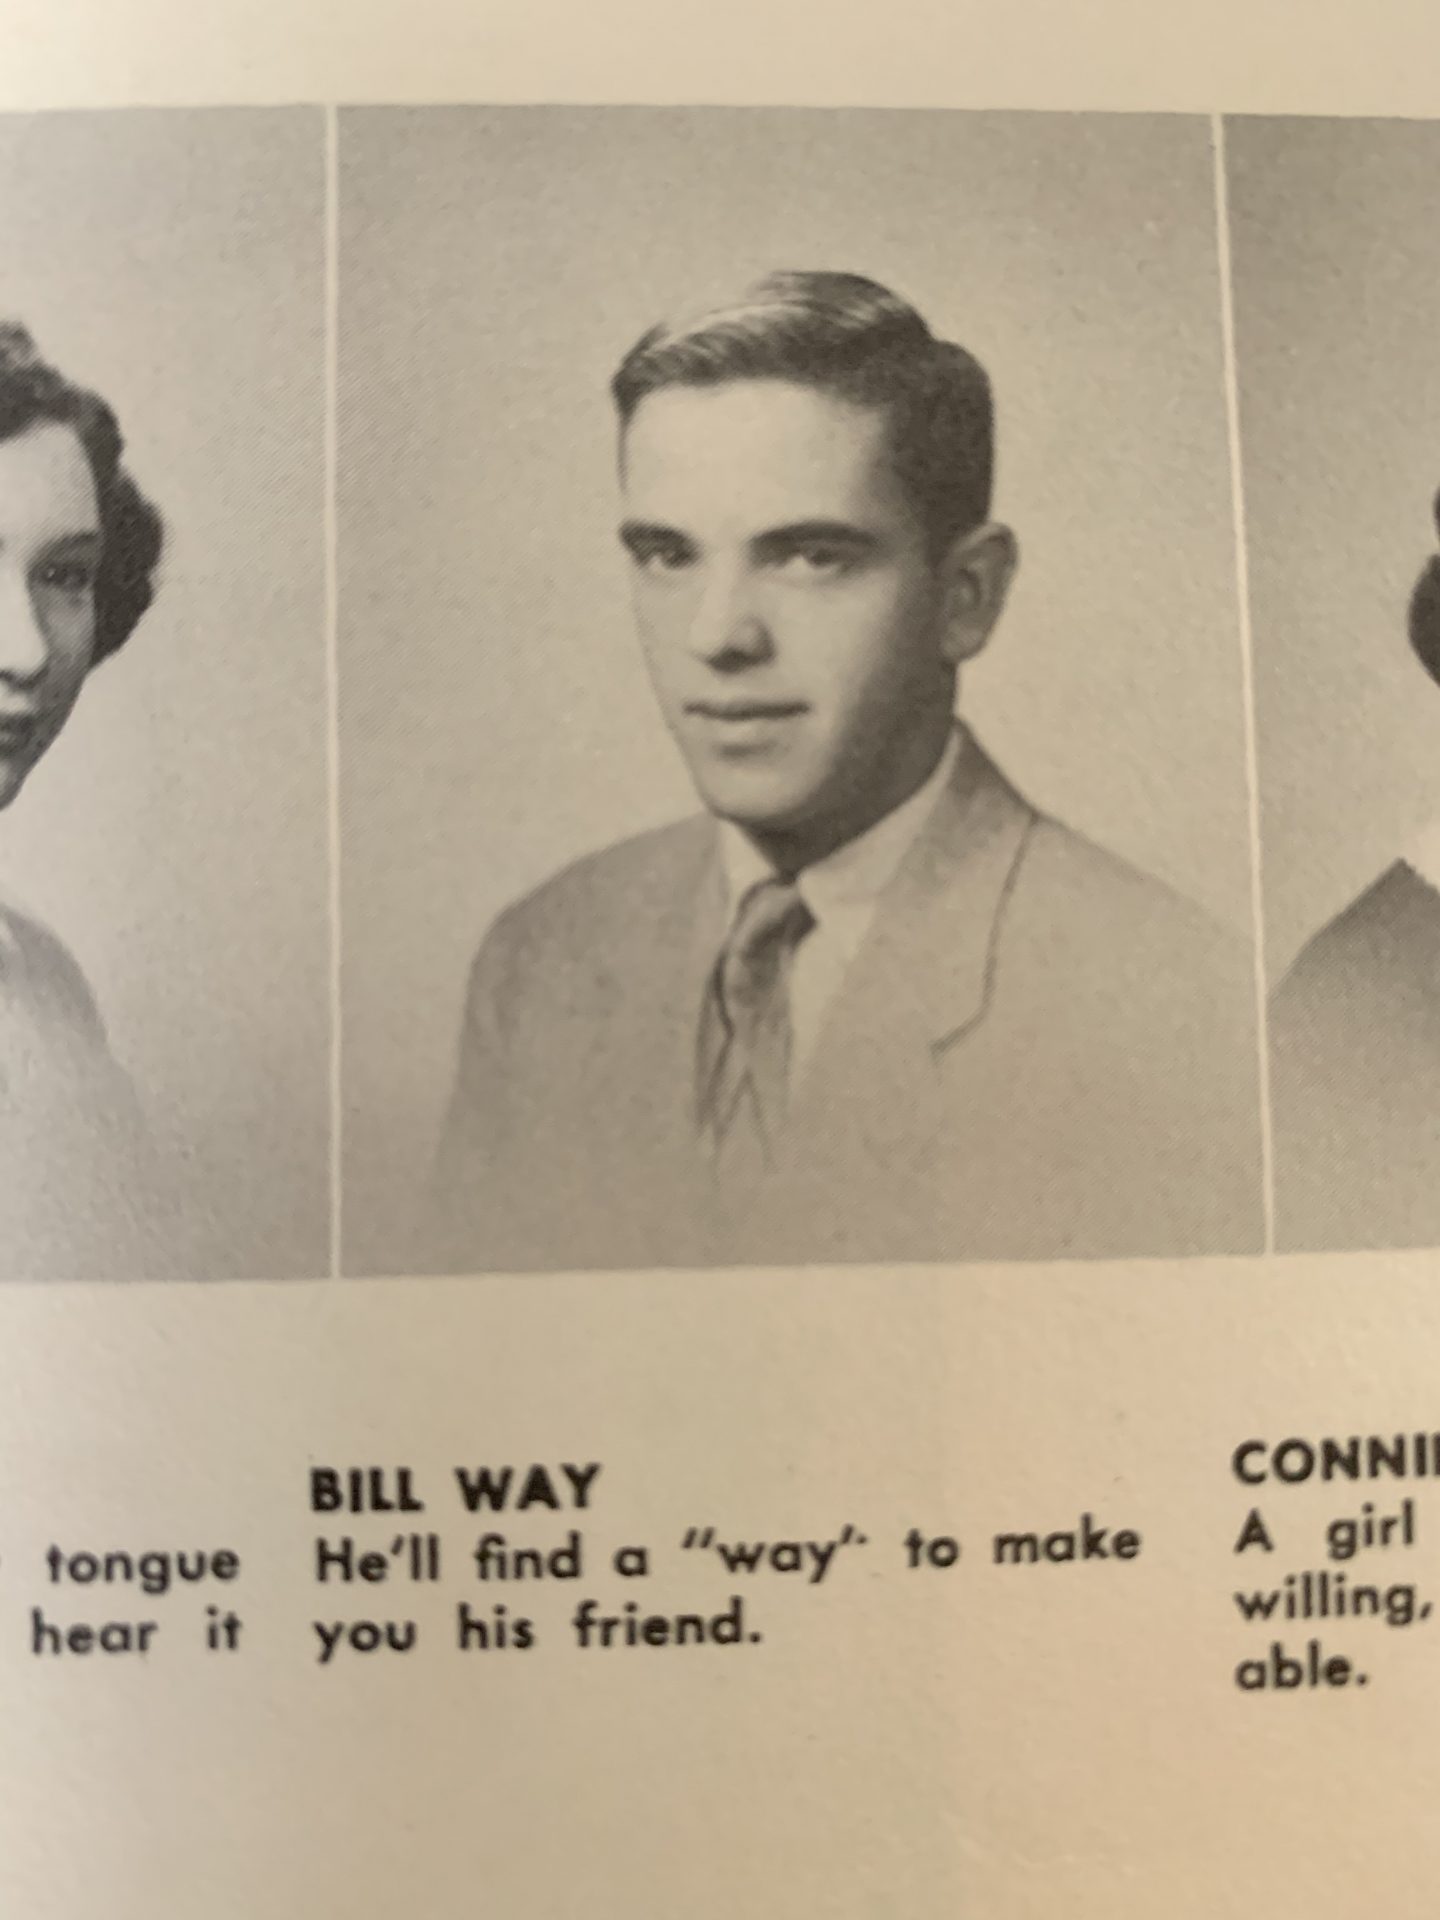 Senior year at Minnetonka High School, 1956.